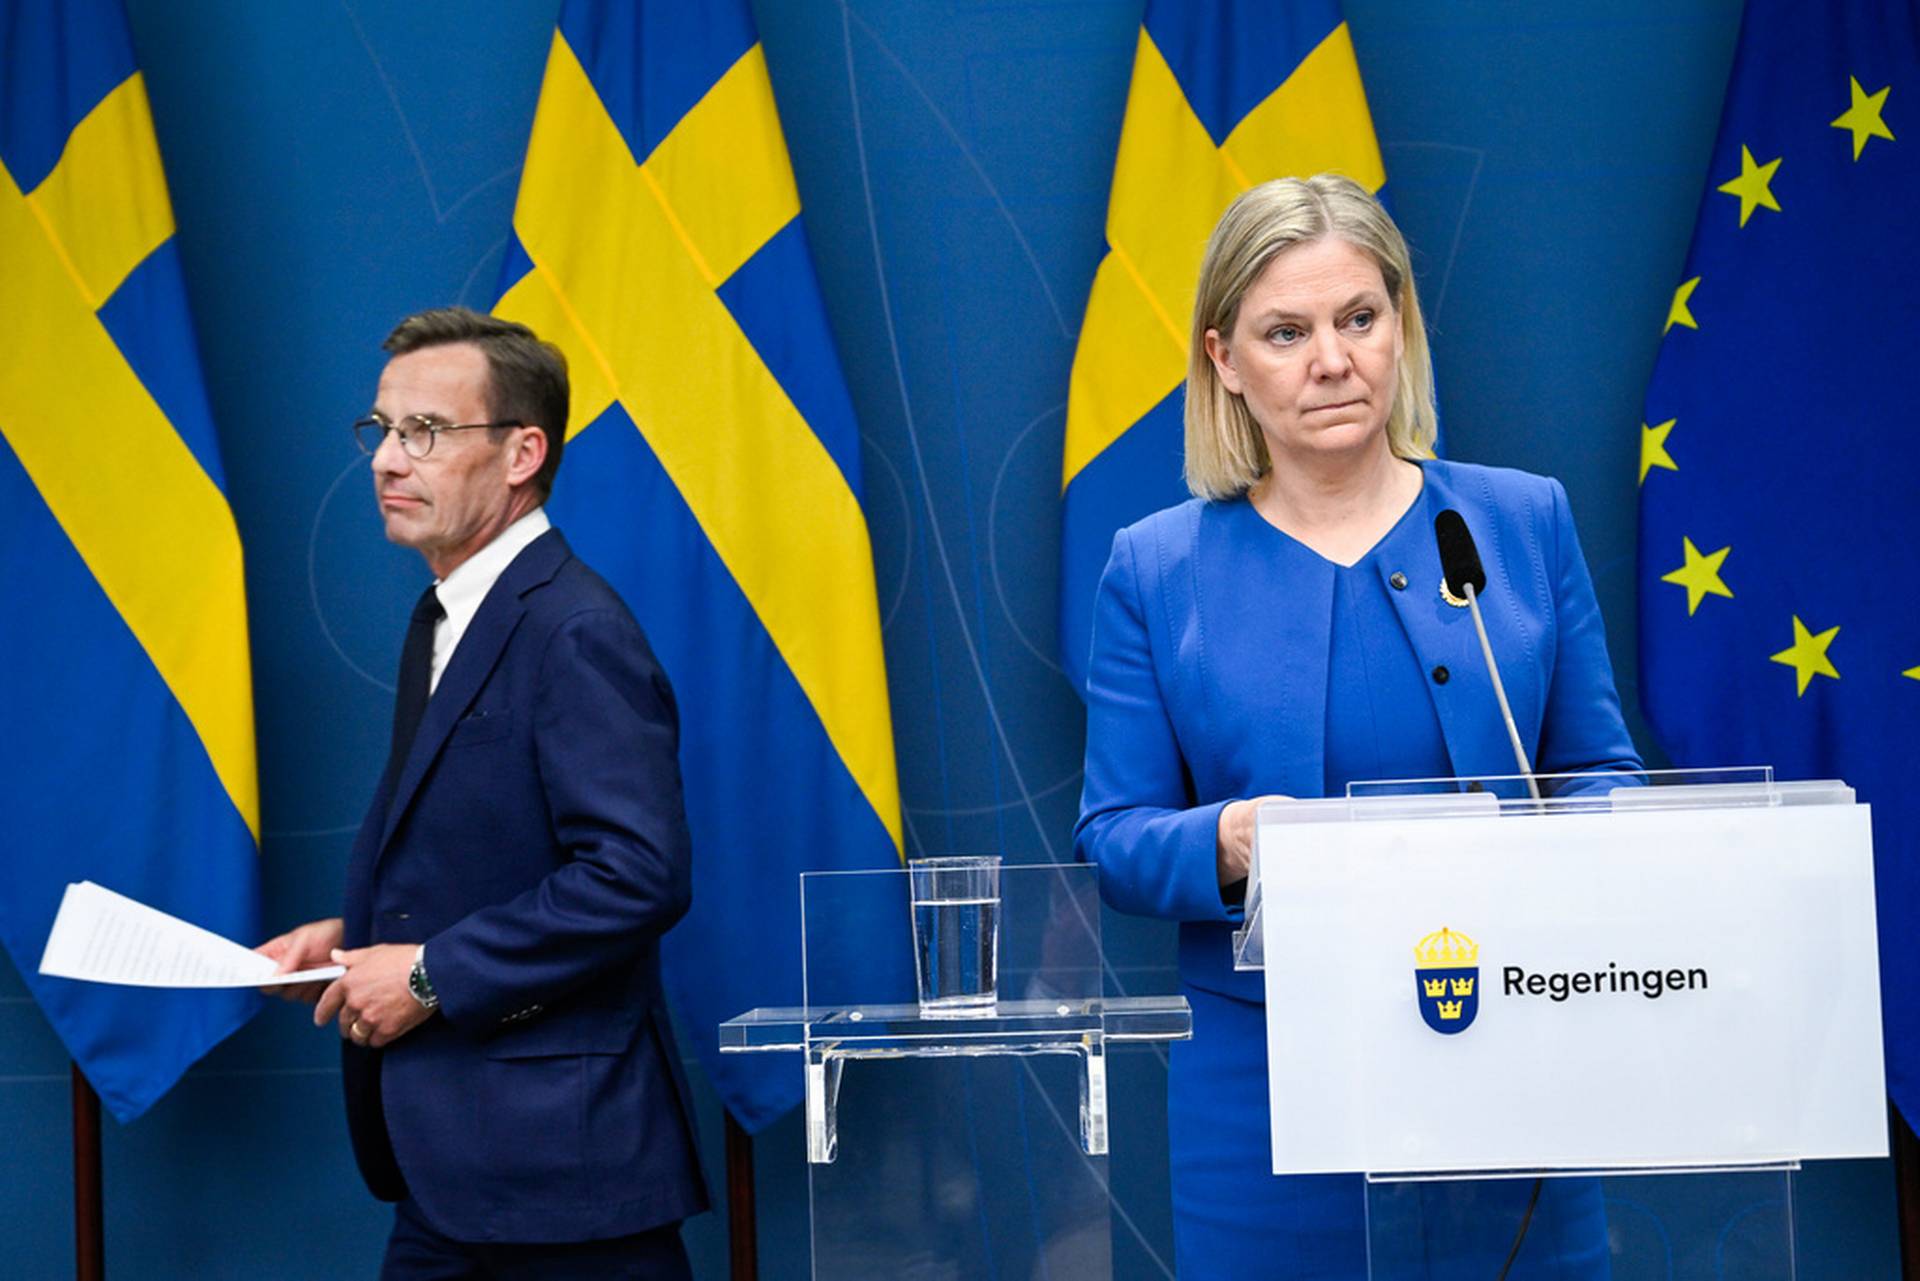 Done: Sweden seeks NATO membership: “Leaving an era”